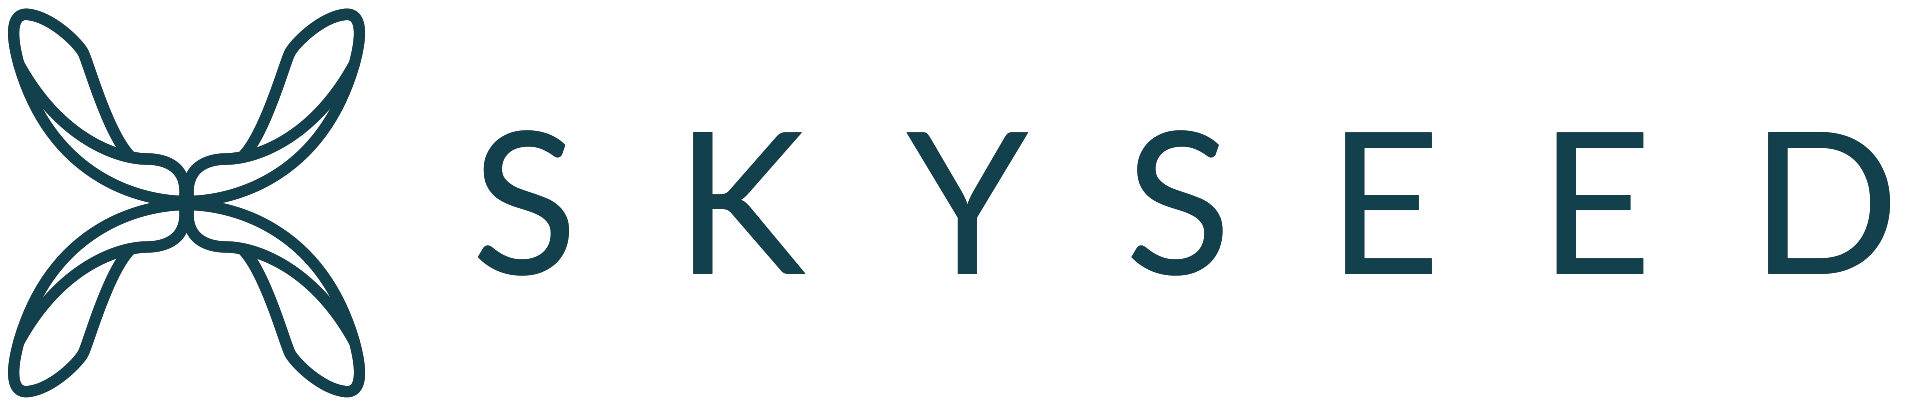 Skyseed logosu